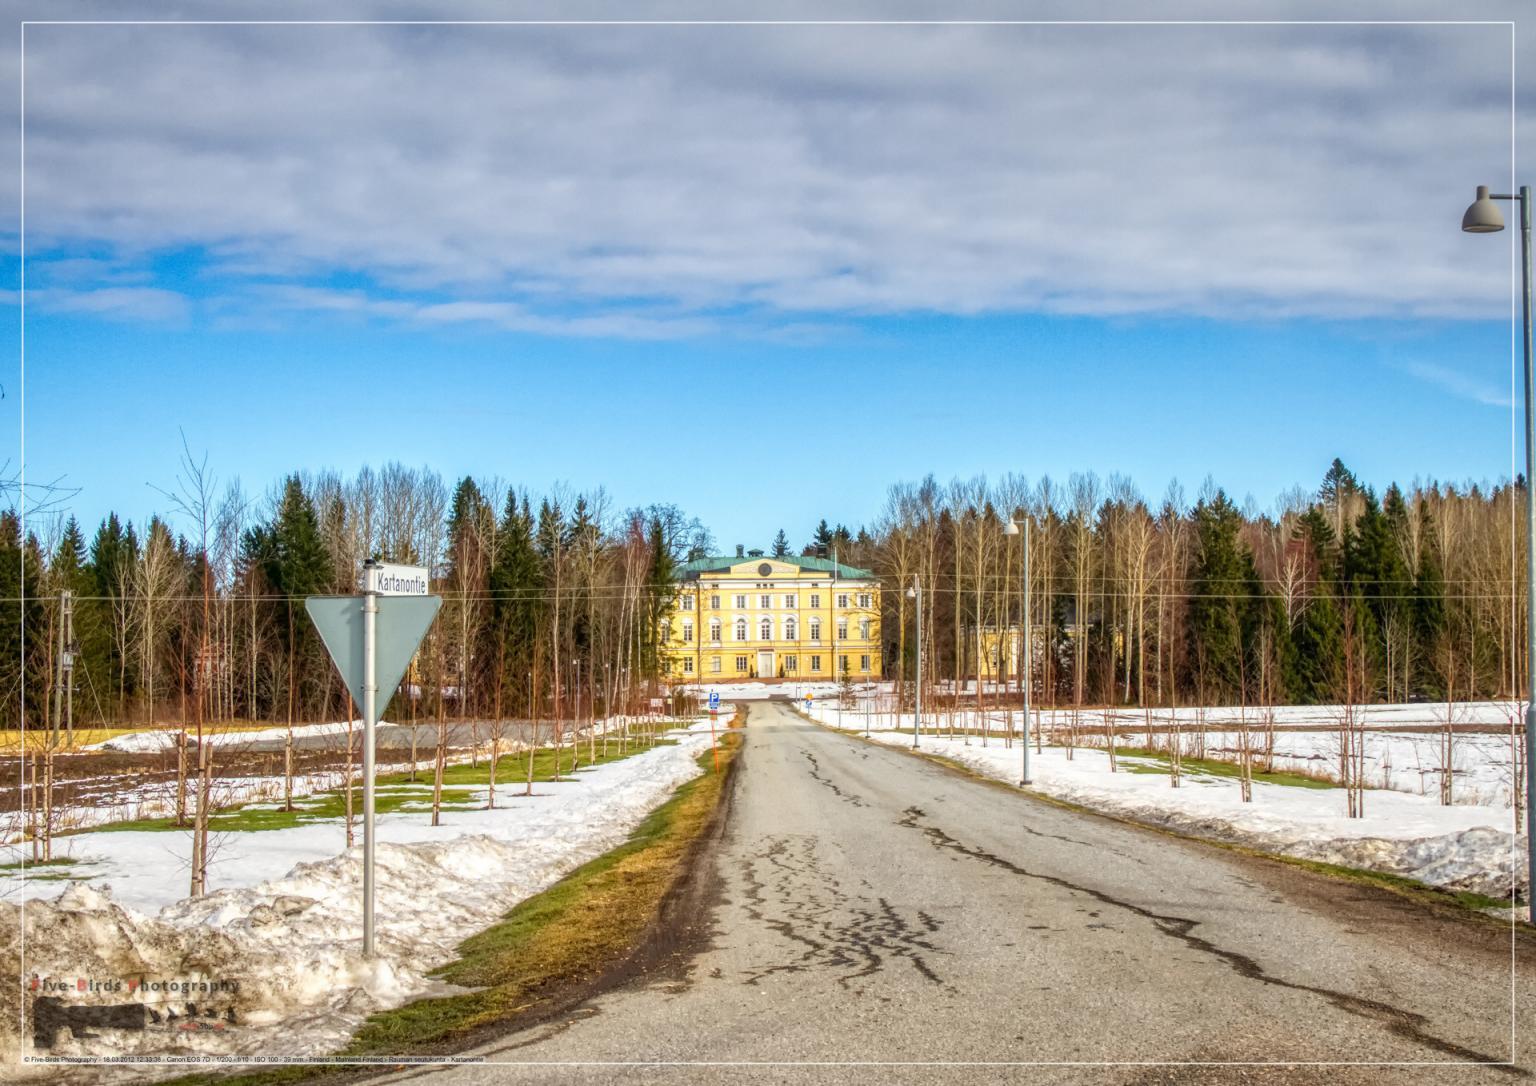 The manor house of Vuojoki in Finland in a beautiful winter landscape